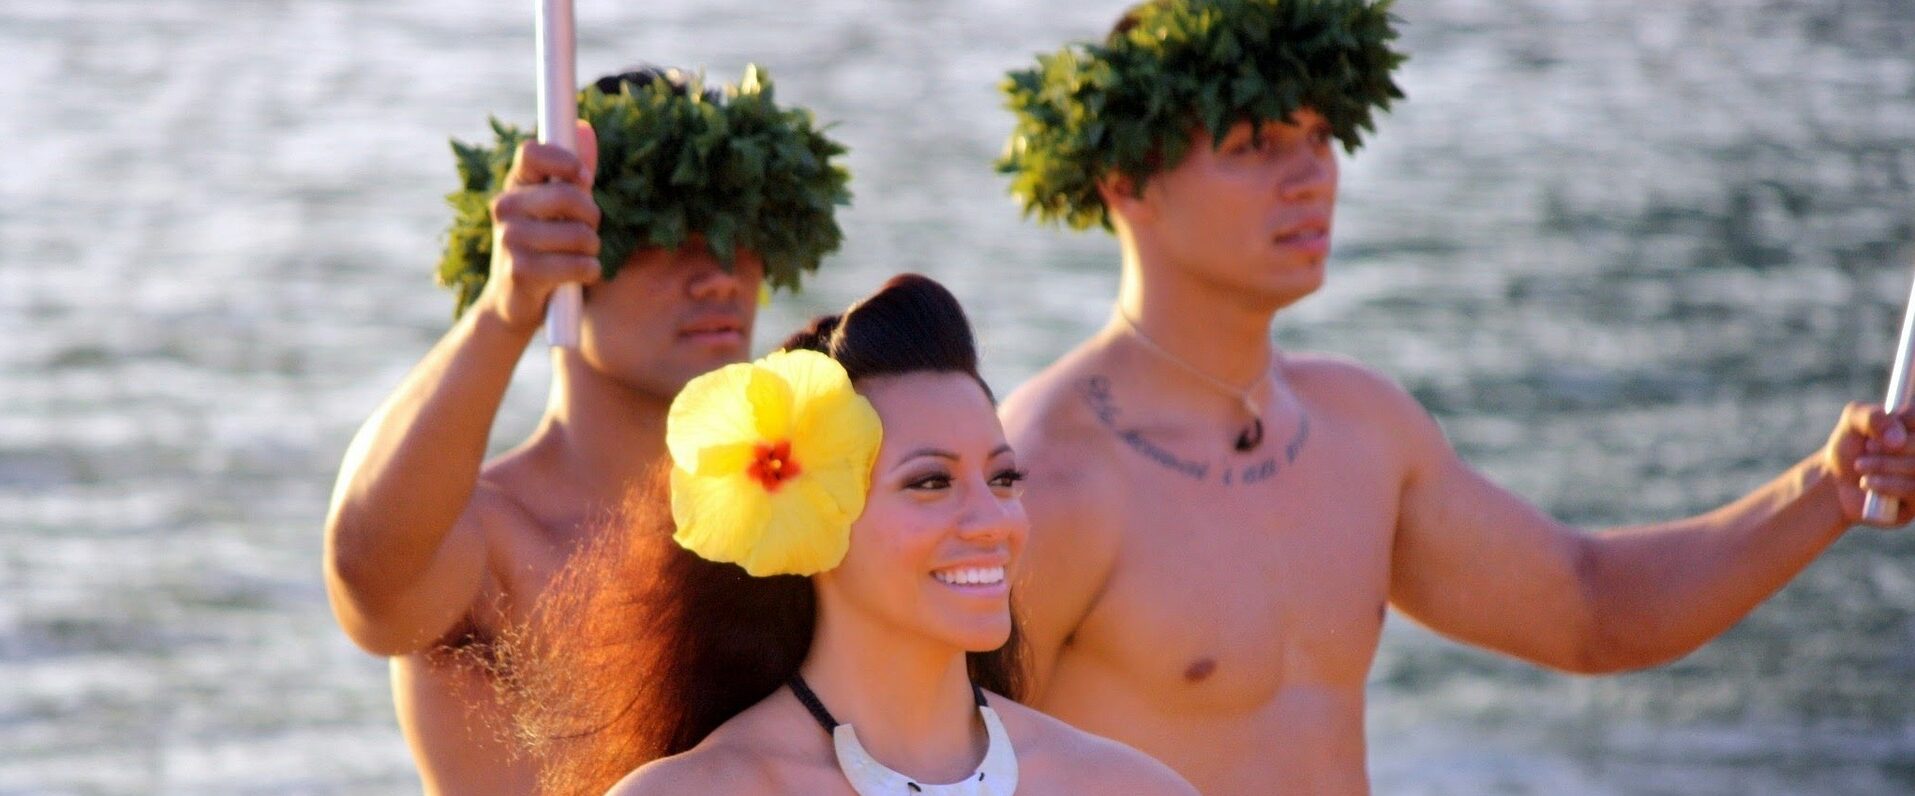 Dancers at a luau, one amazing facet of Oahu culture.